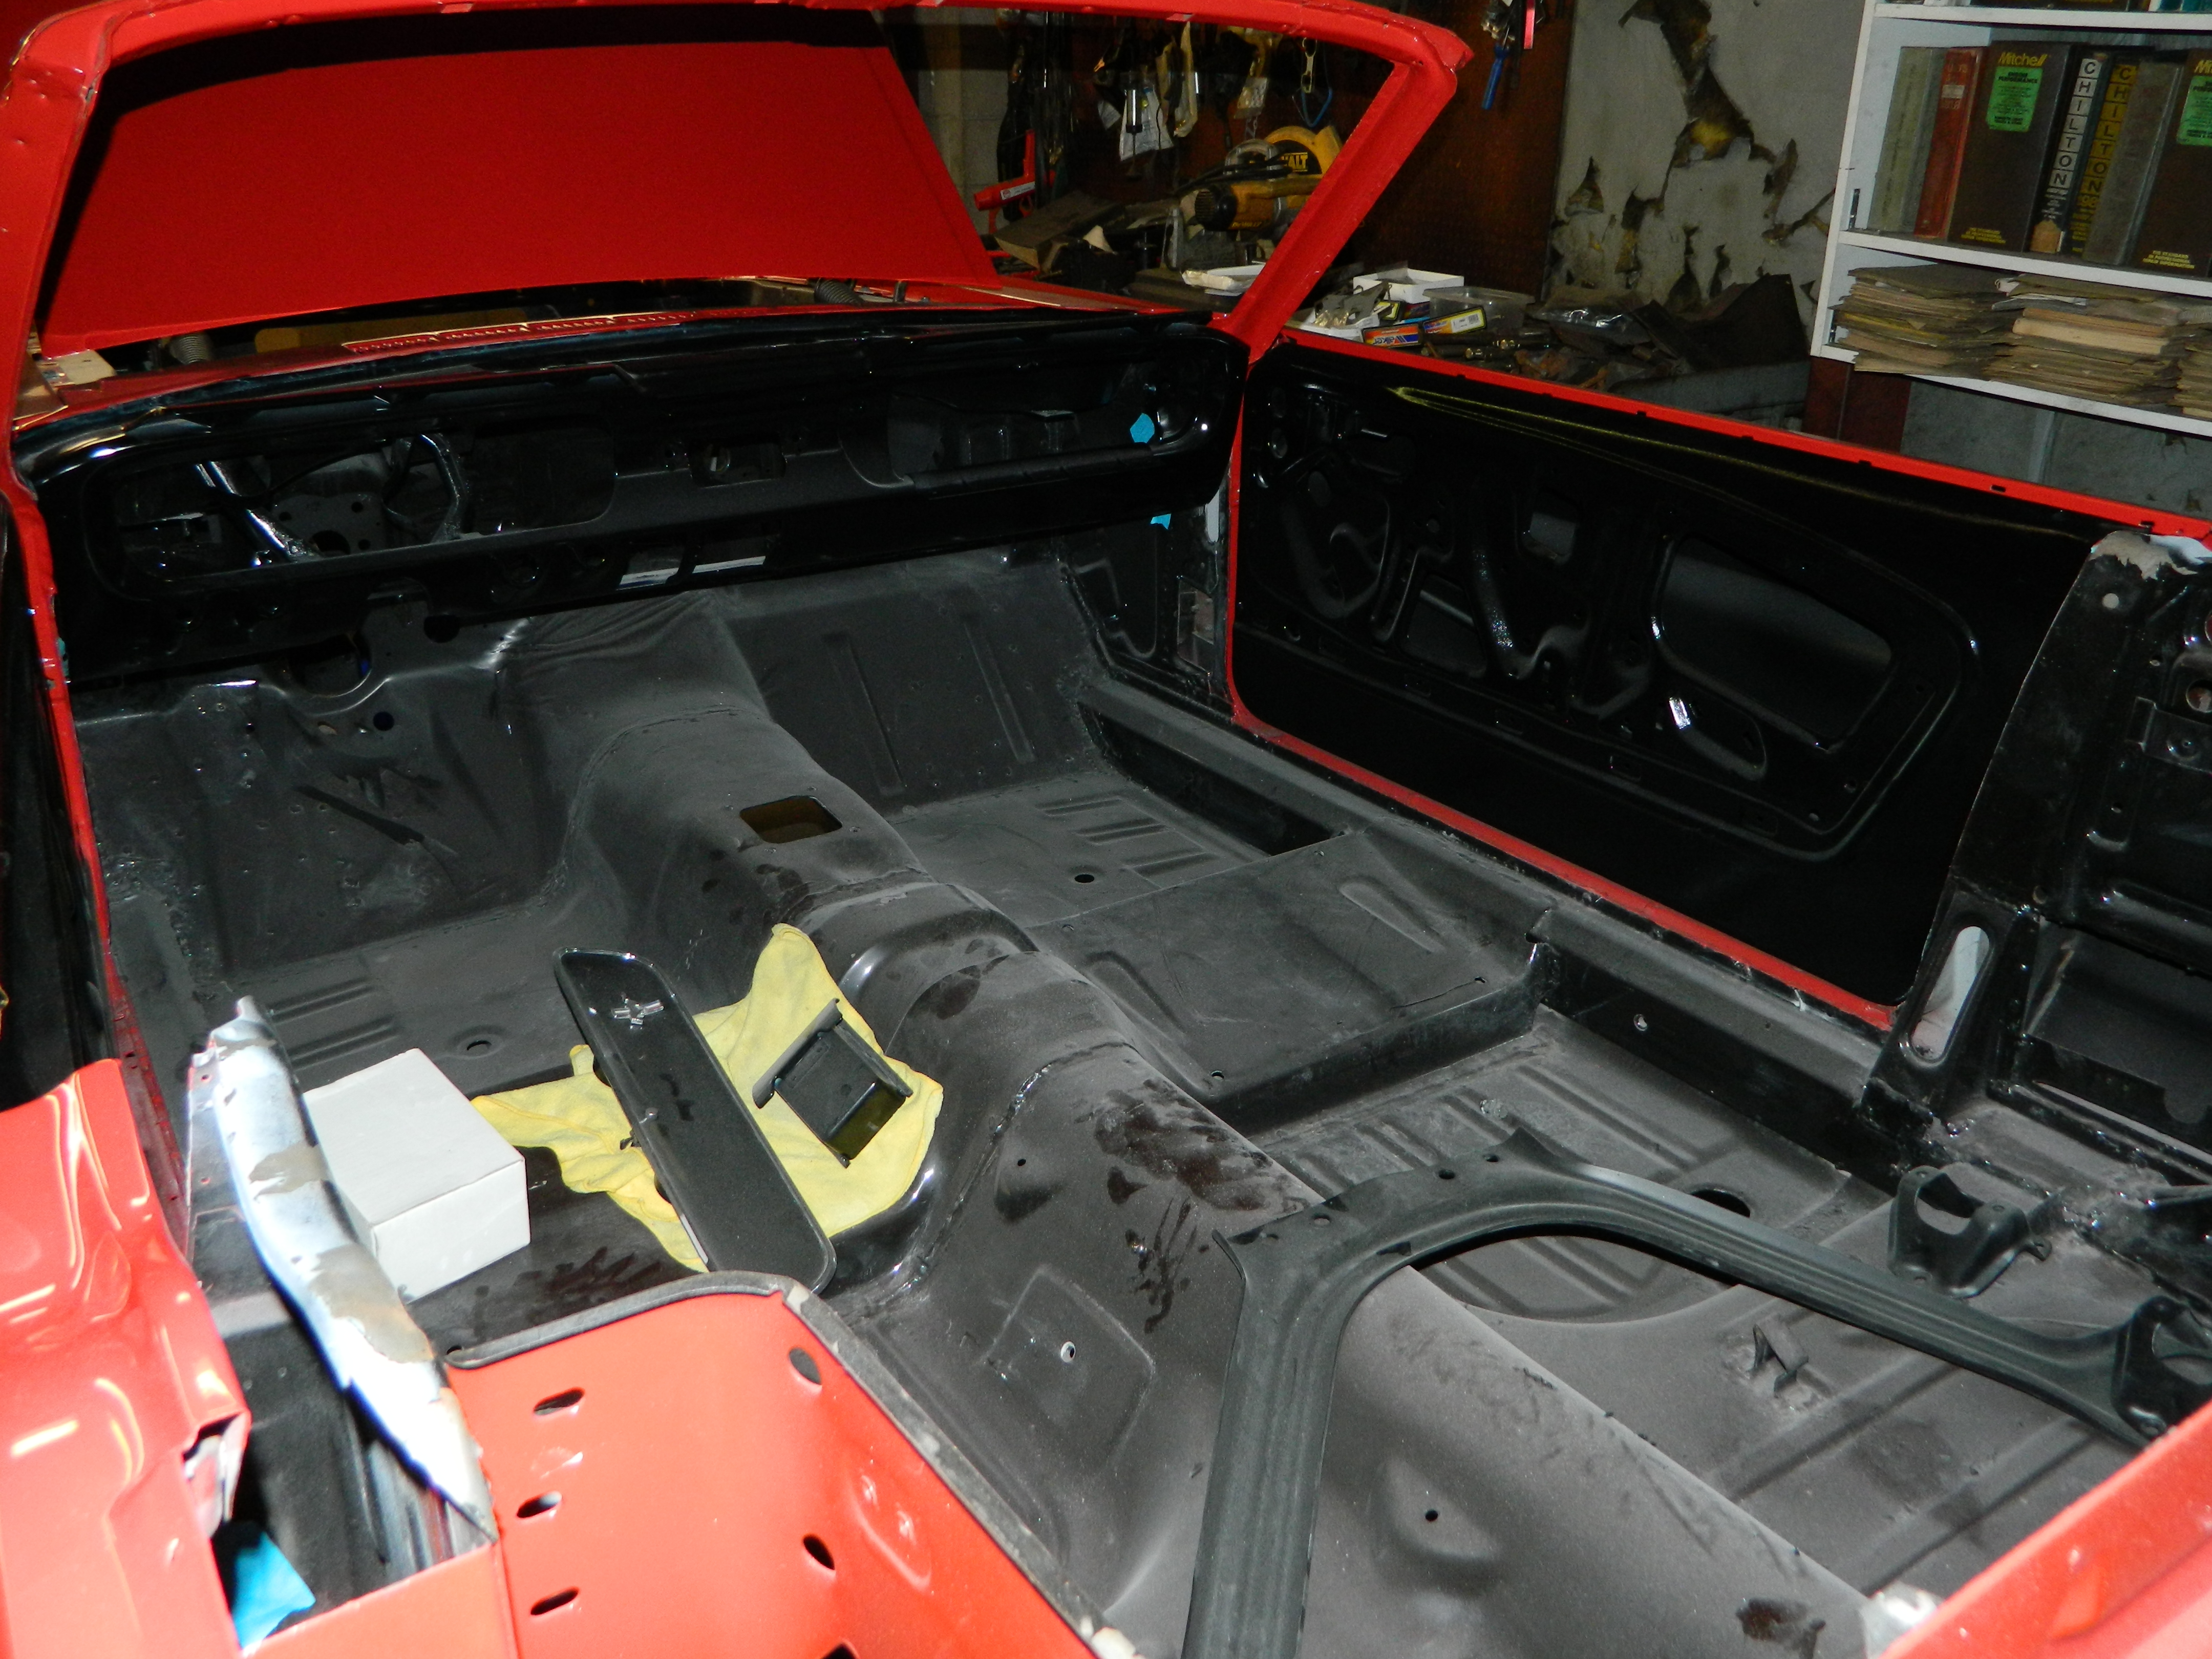 Clark's Auto Clinic 65 Mustang Restoration